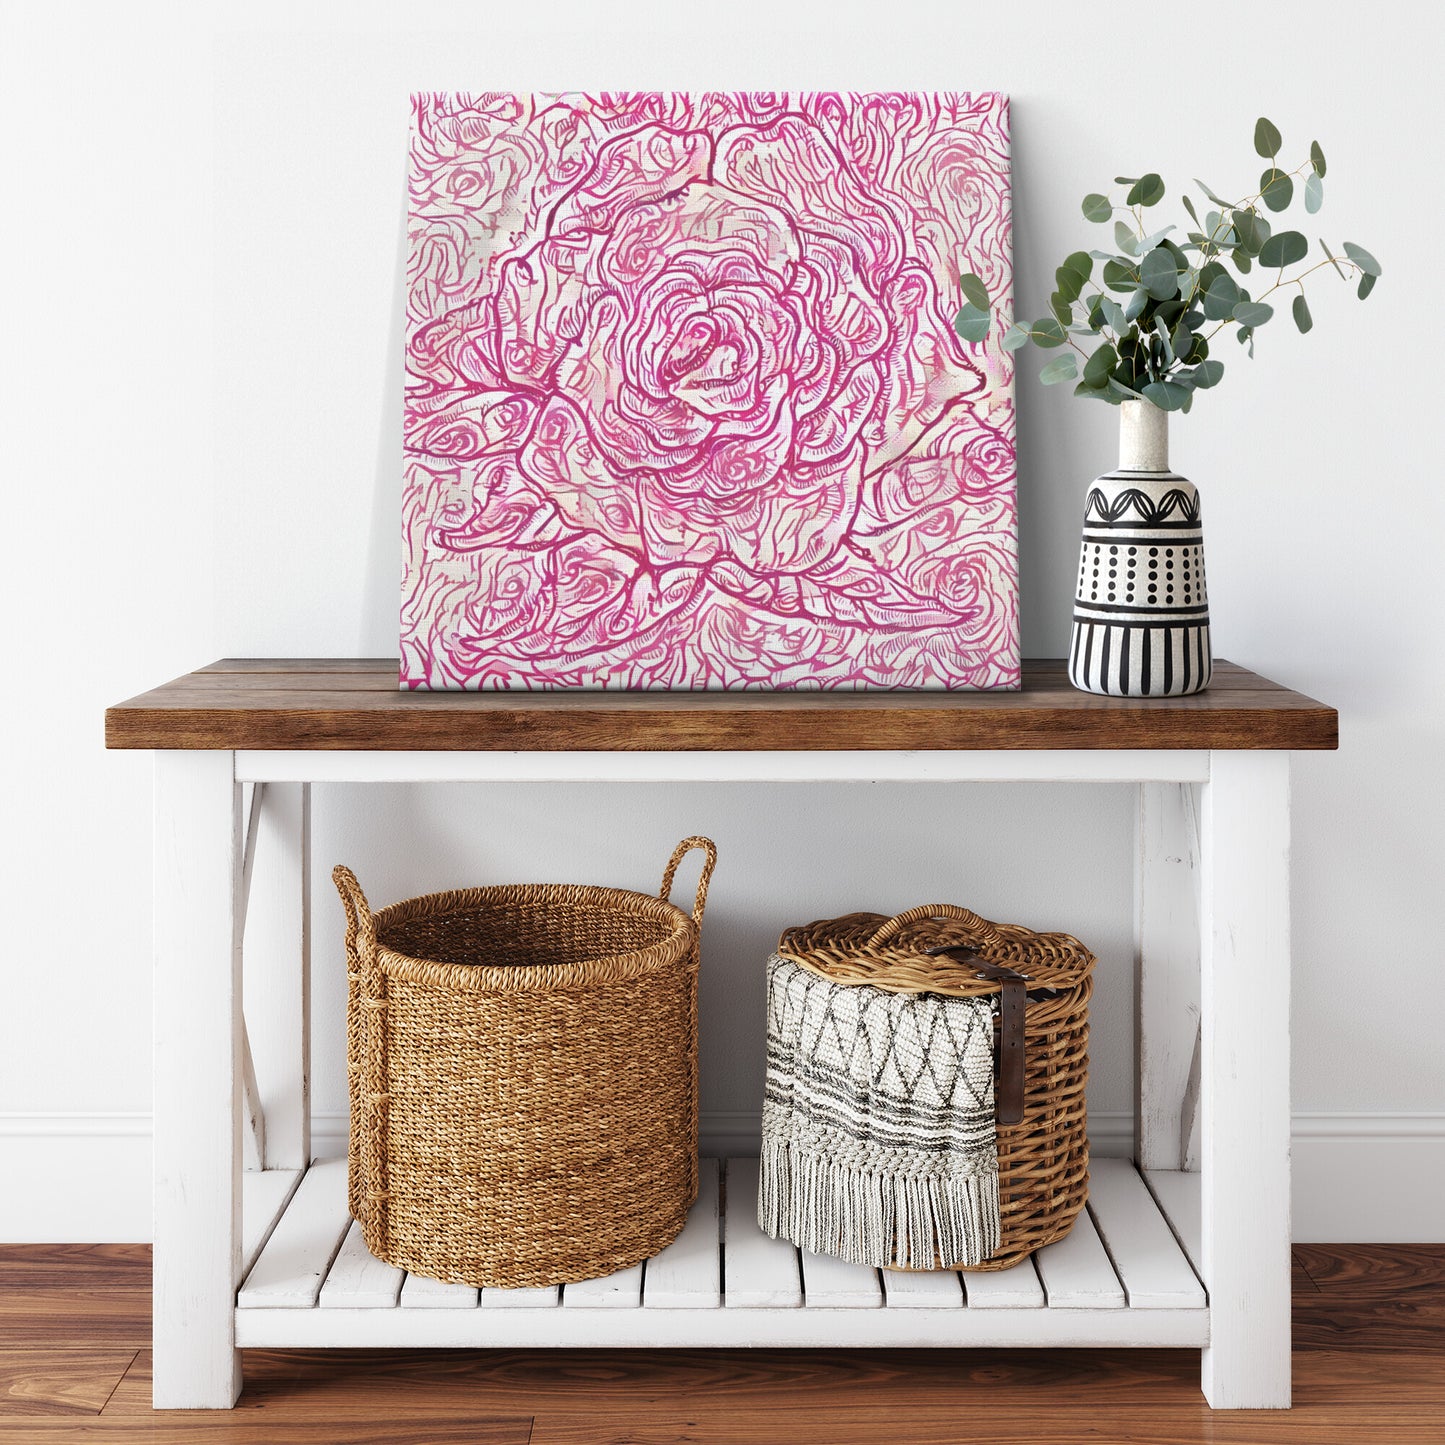 Rose Flower Abstract Print, Rose Pattern Wall Decor, AI Art